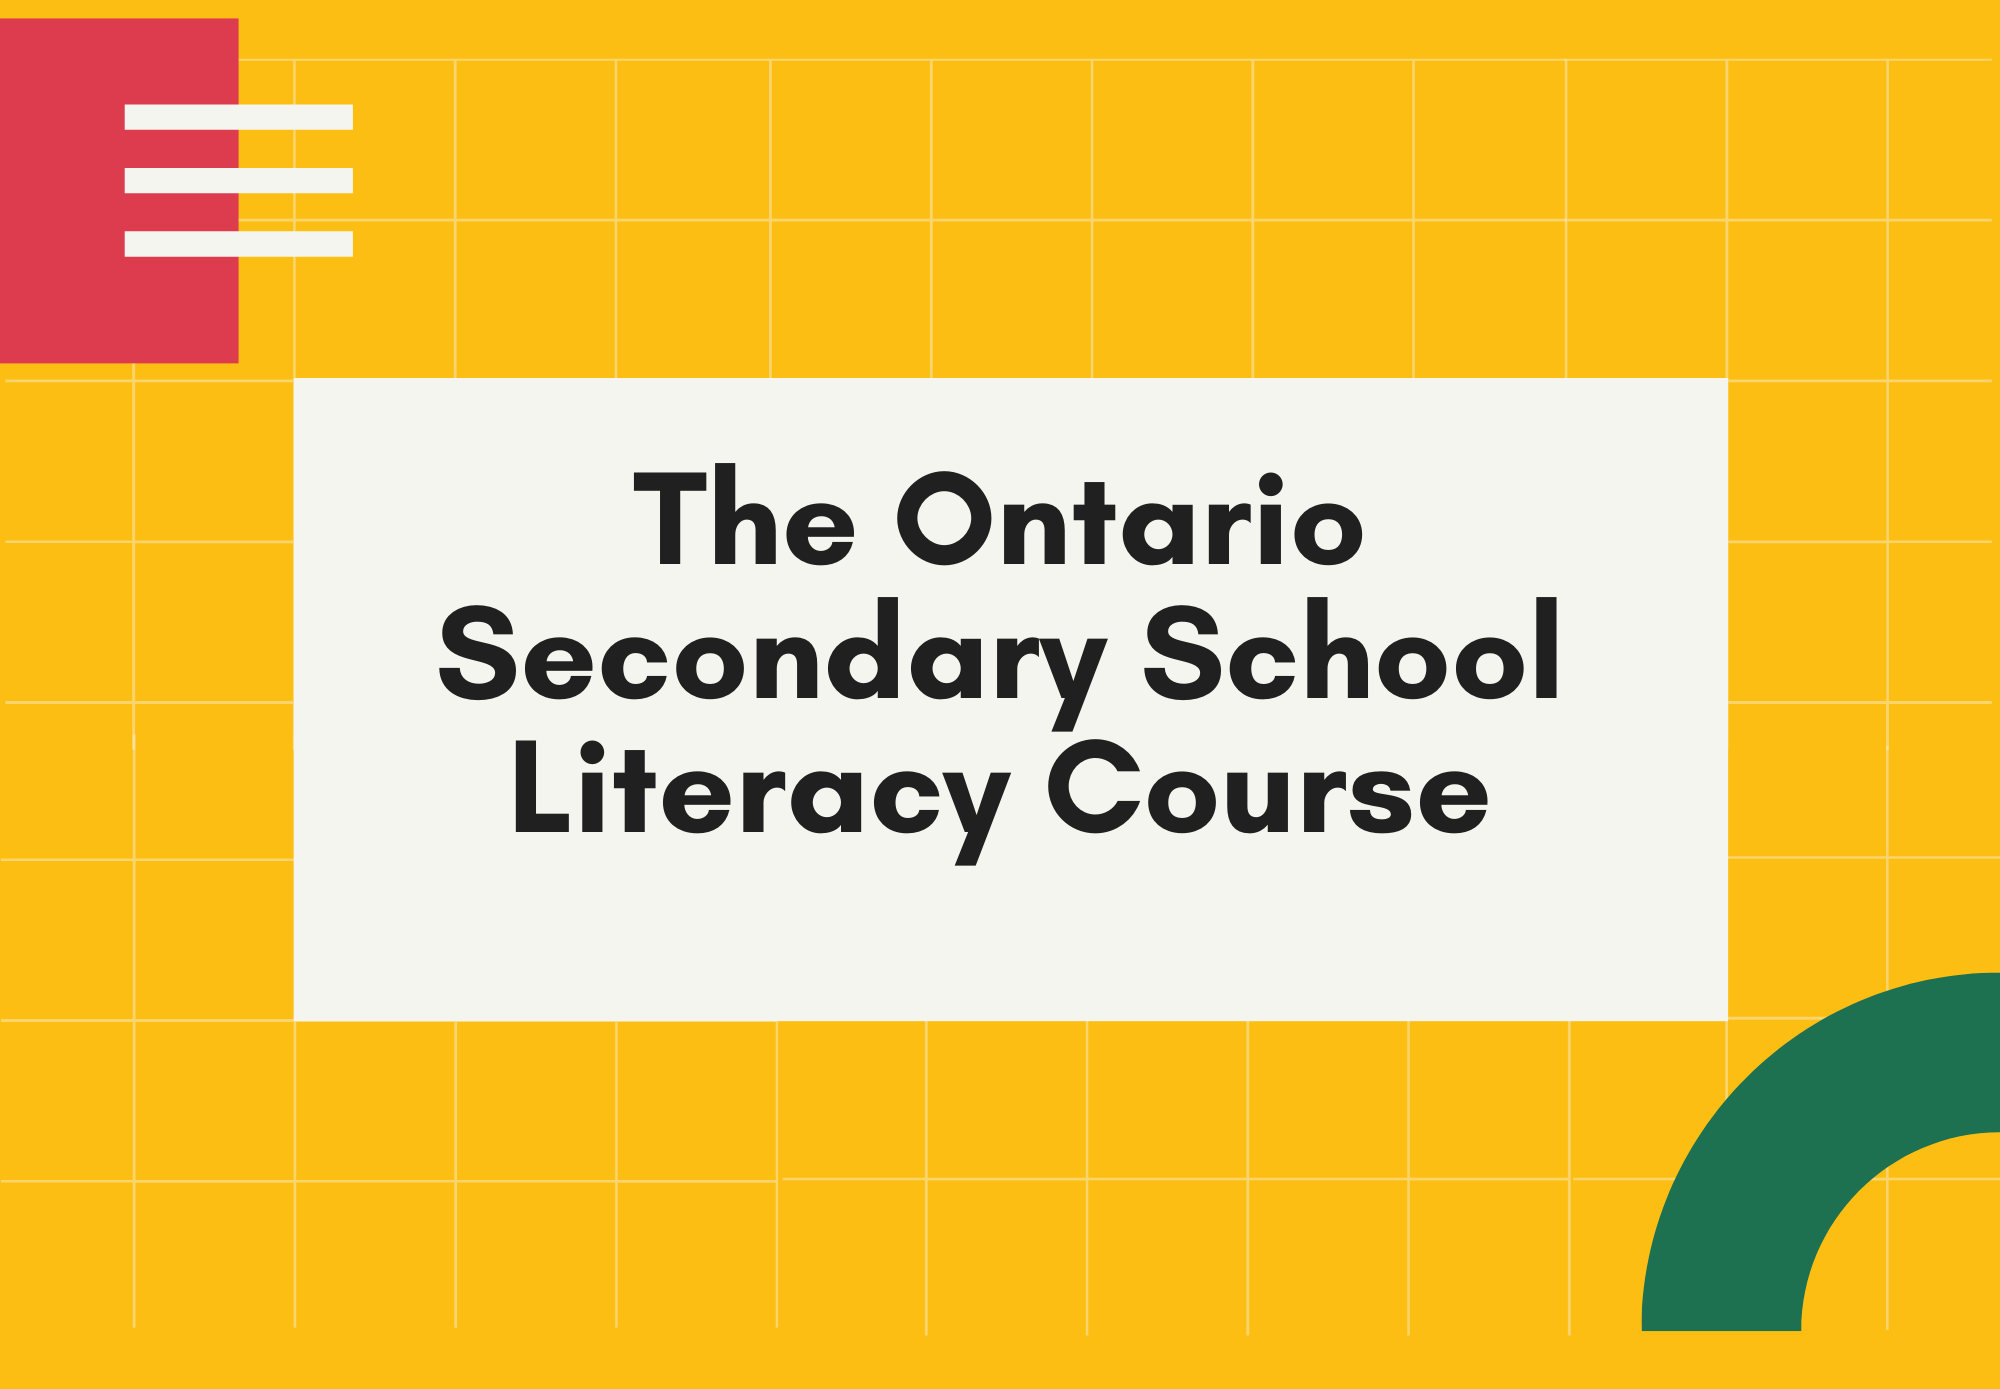 The Ontario Secondary School Literacy Course